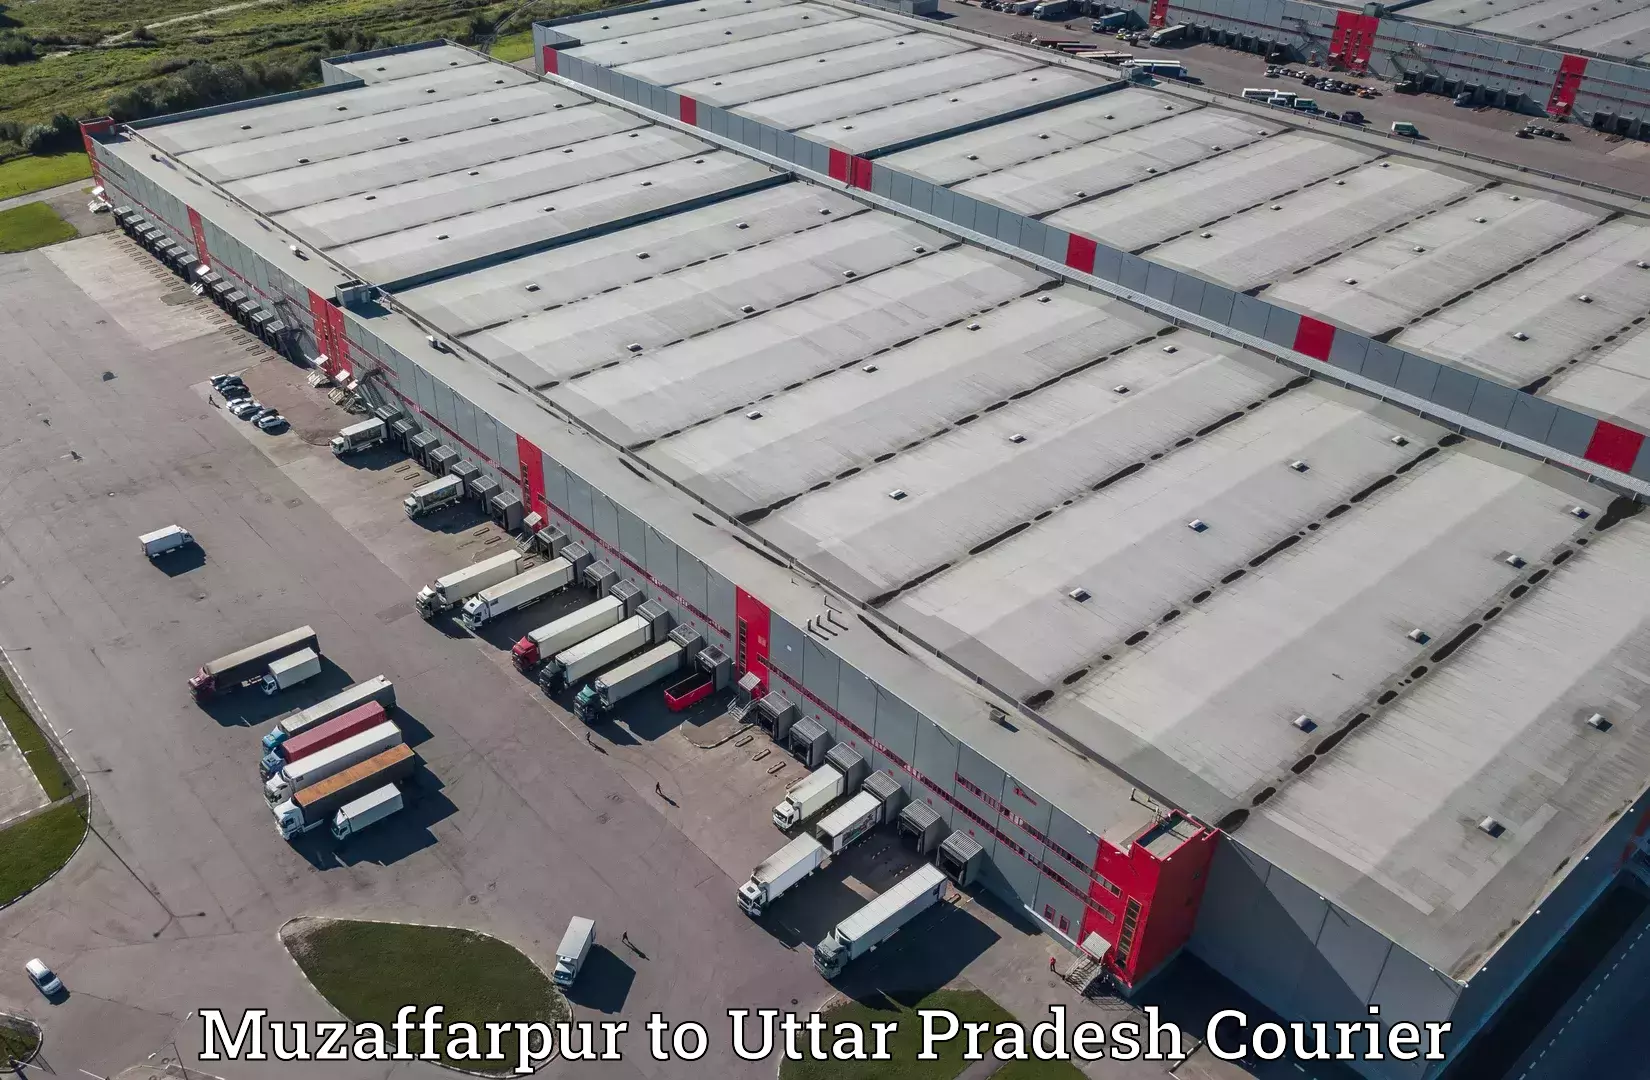 Express delivery capabilities Muzaffarpur to Aligarh